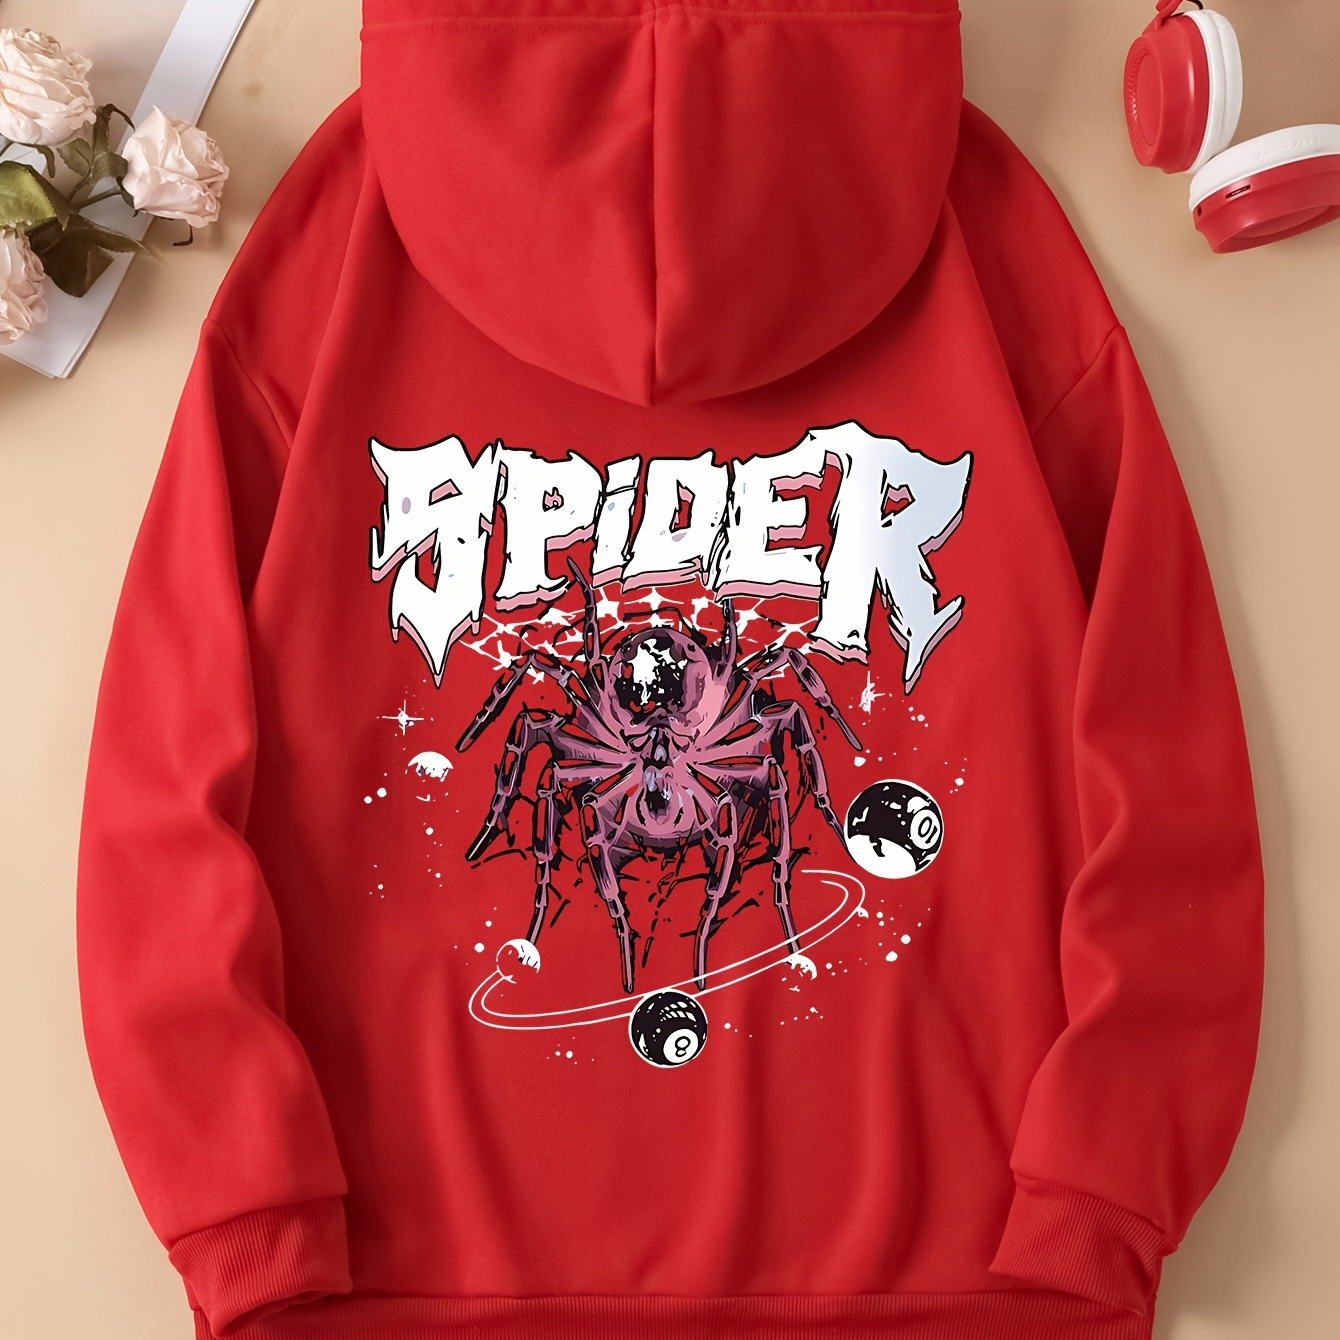 

Spider Print Hoodie, Drawstring Casual Hooded Sweatshirt, Women's Clothing